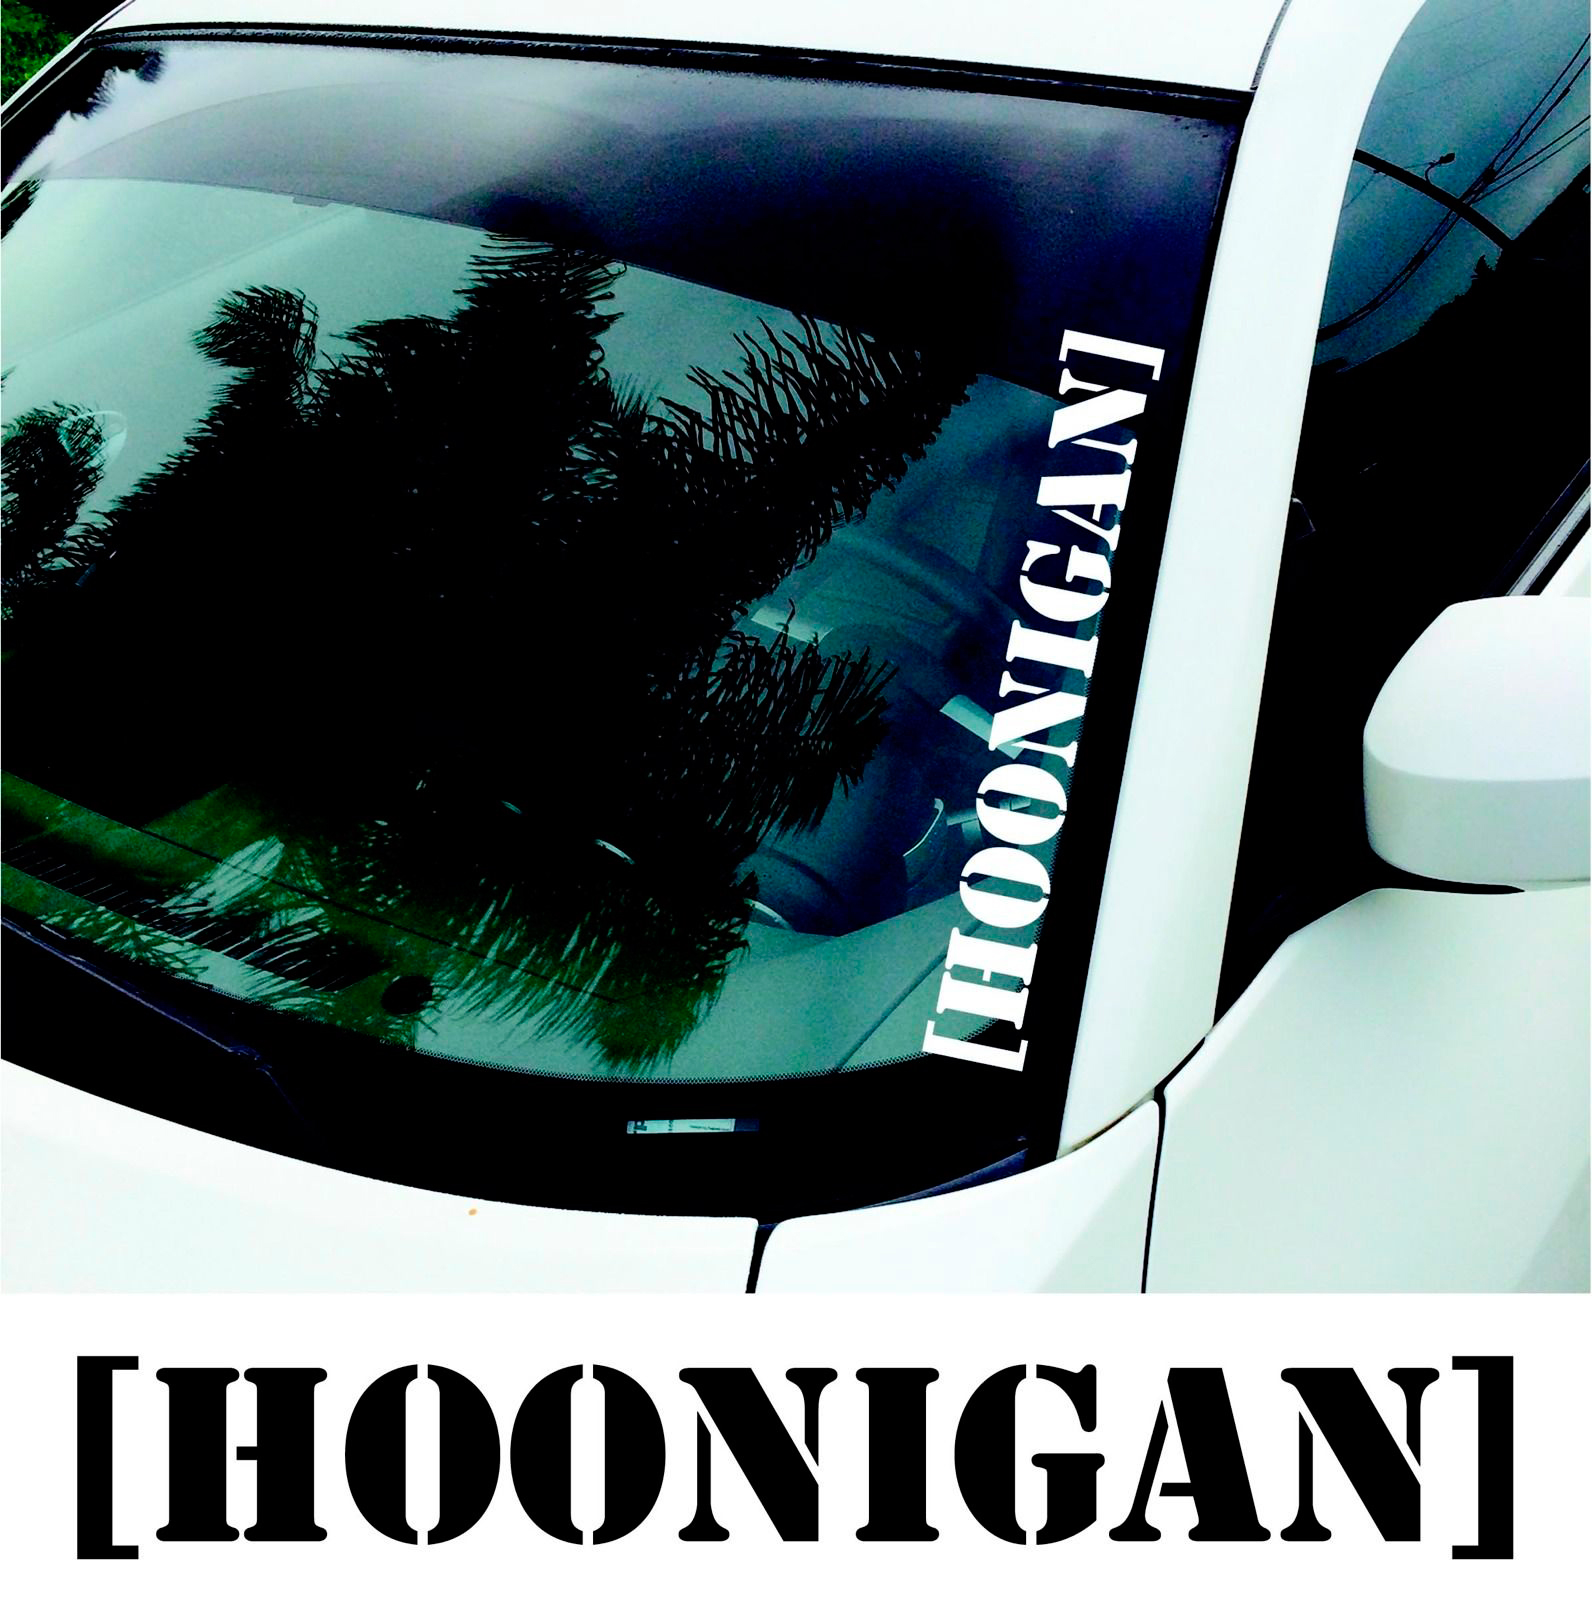 3x HOONIGAN large windscreen stickers Drift JDM EURO DUB decals Vinyl